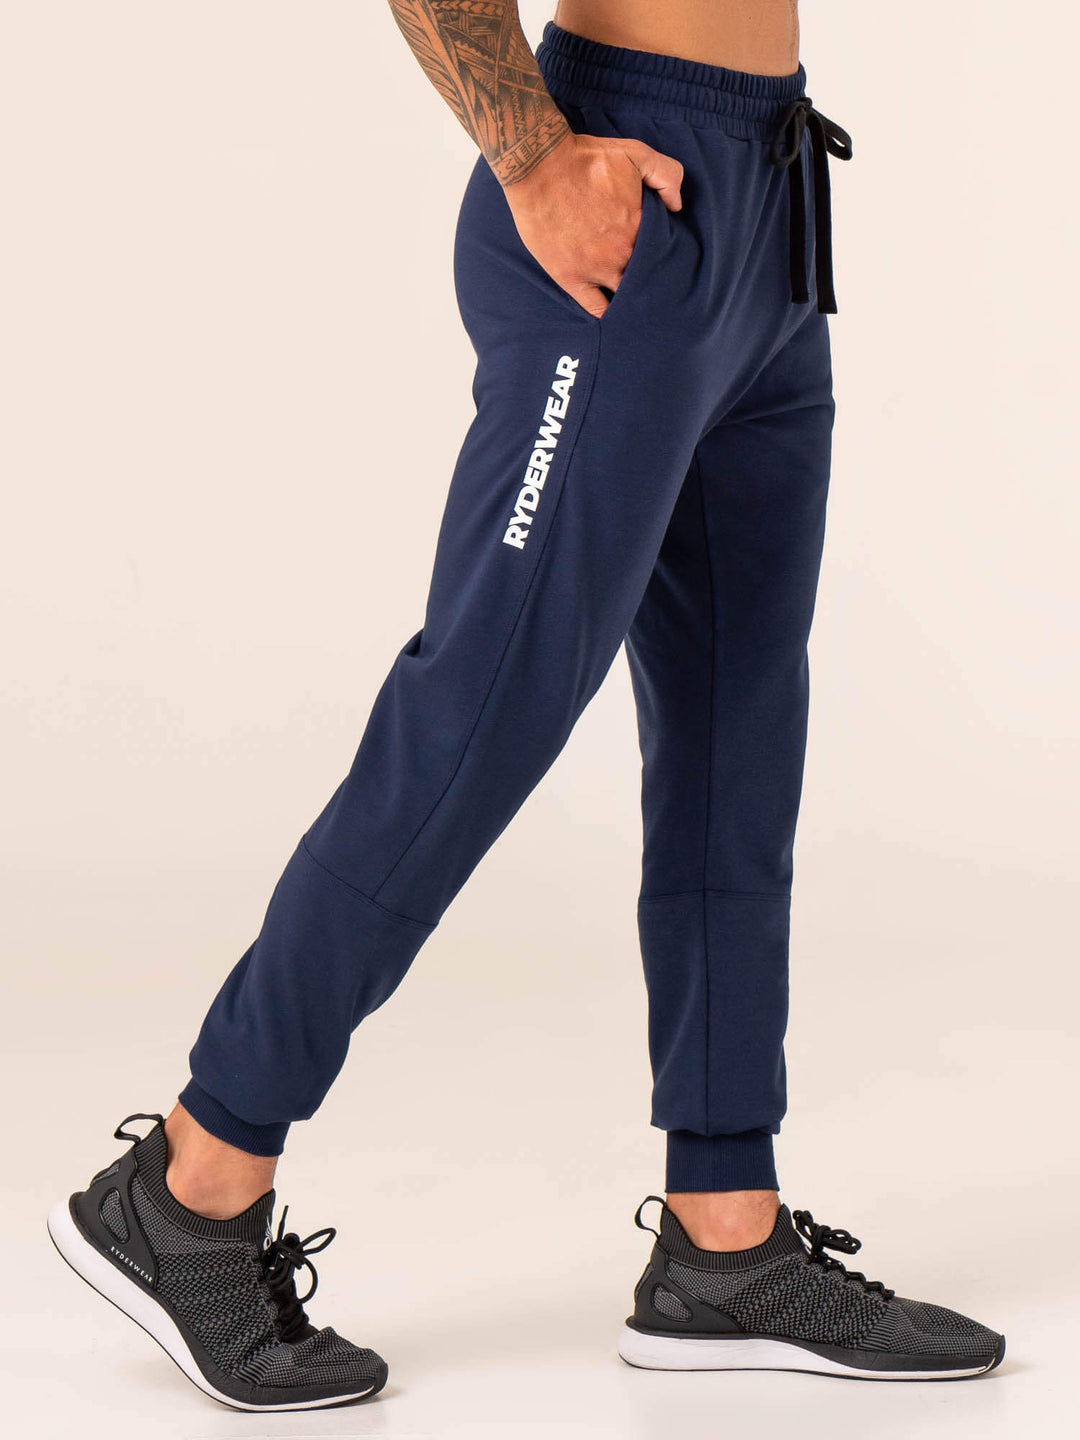 Emerge Track Pant - Navy Clothing Ryderwear 